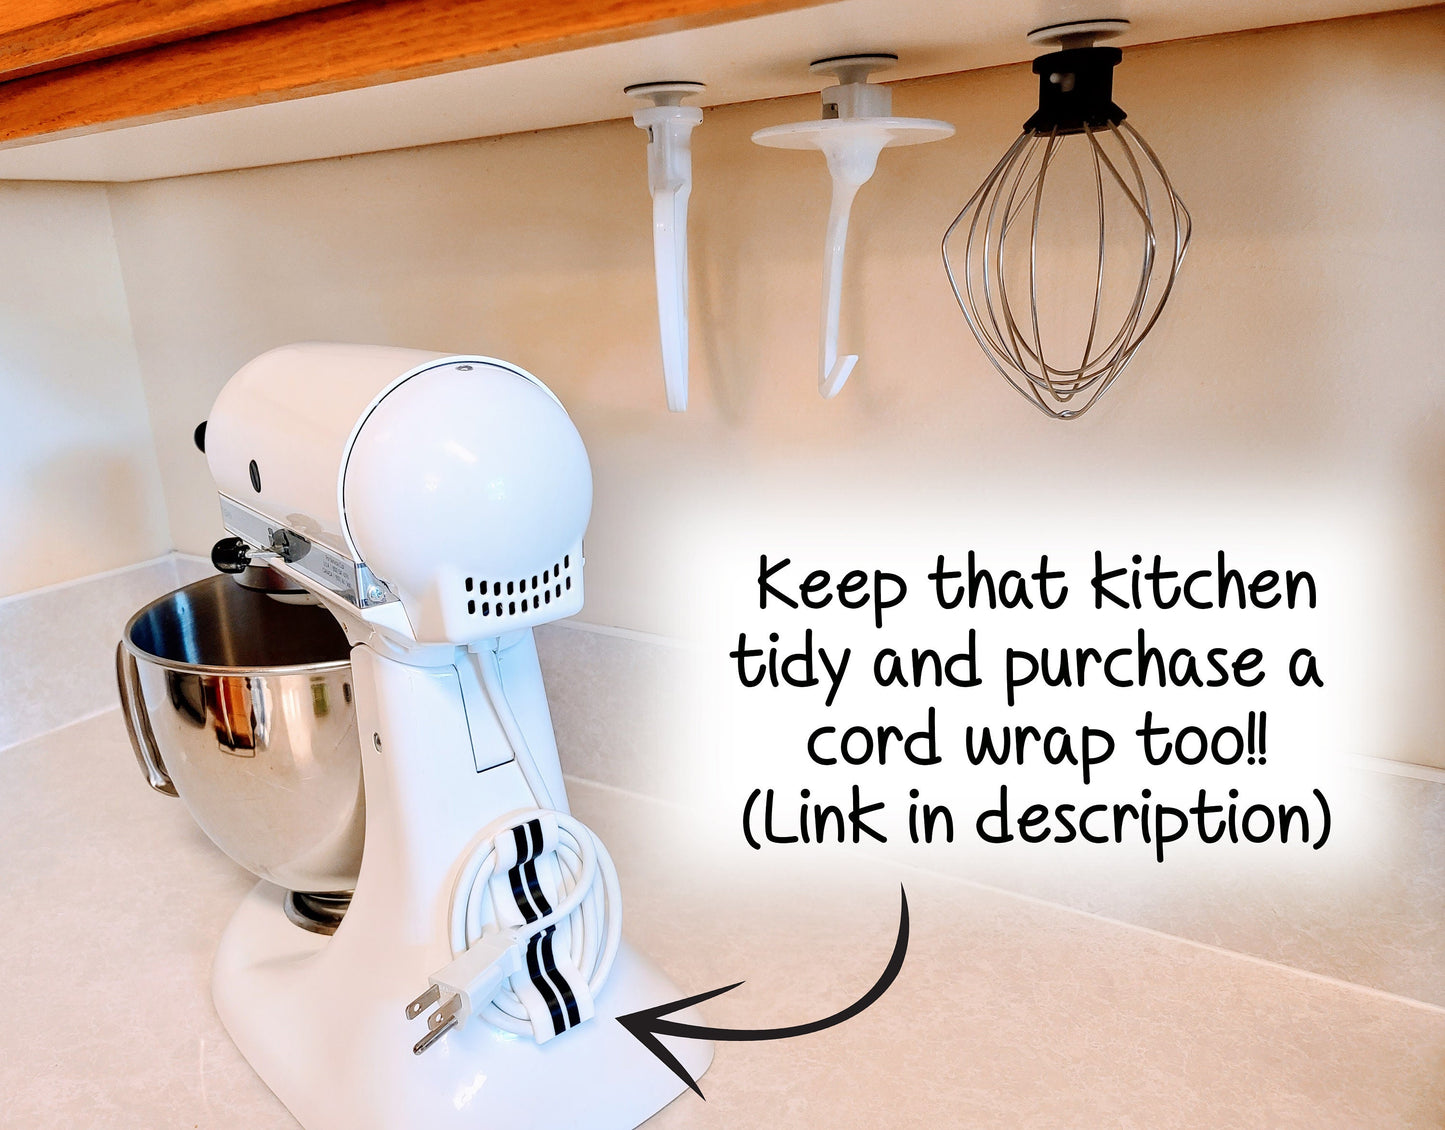 KitchenAid Mixer | Attachment Holder | Space Saver | Organizer Mount | Easy Install